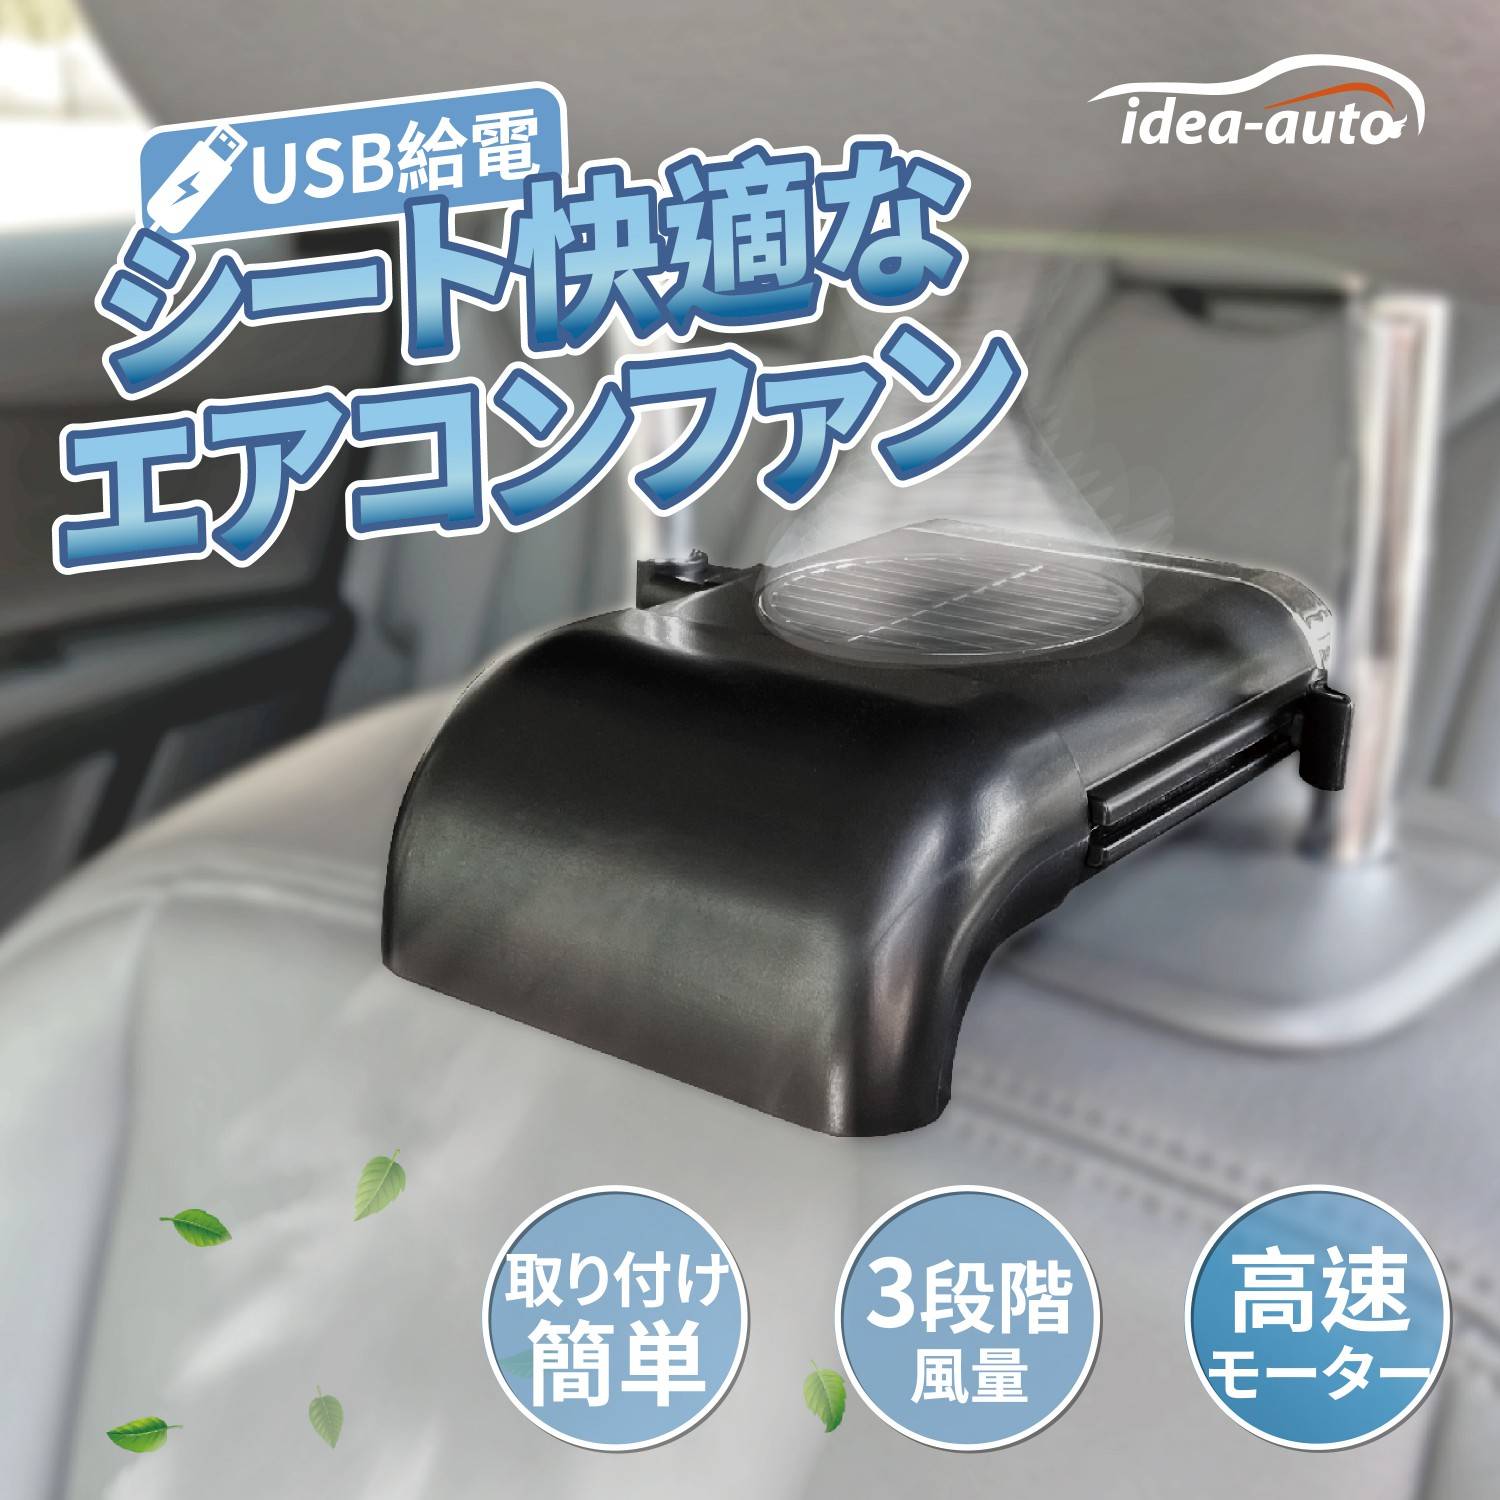 【idea-auto】USBシート快適なエアコンファン